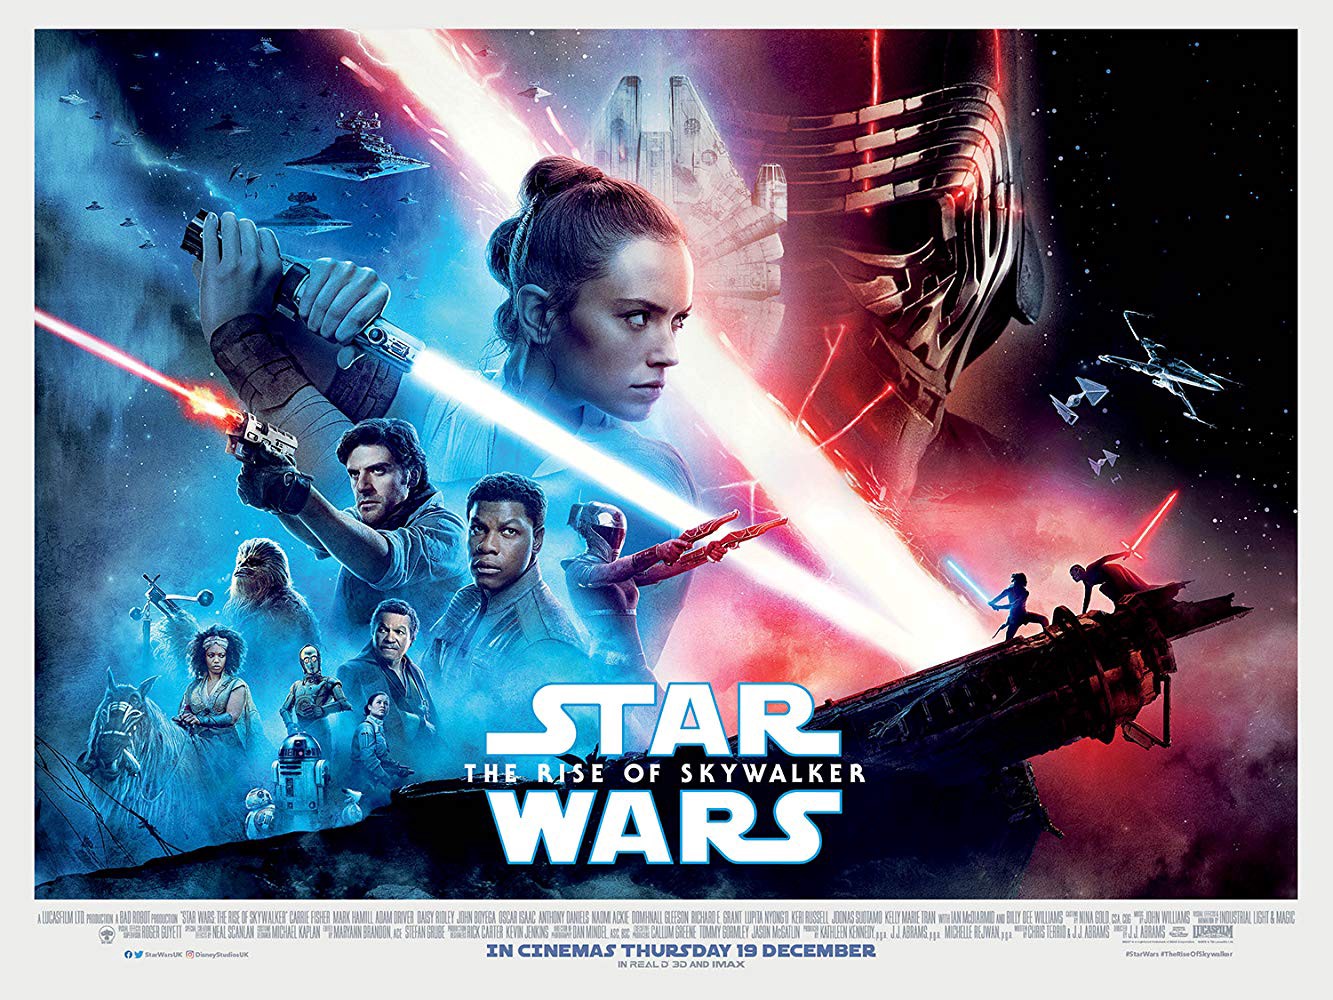 Star Wars Episode IX The Rise of Skywalker Movie